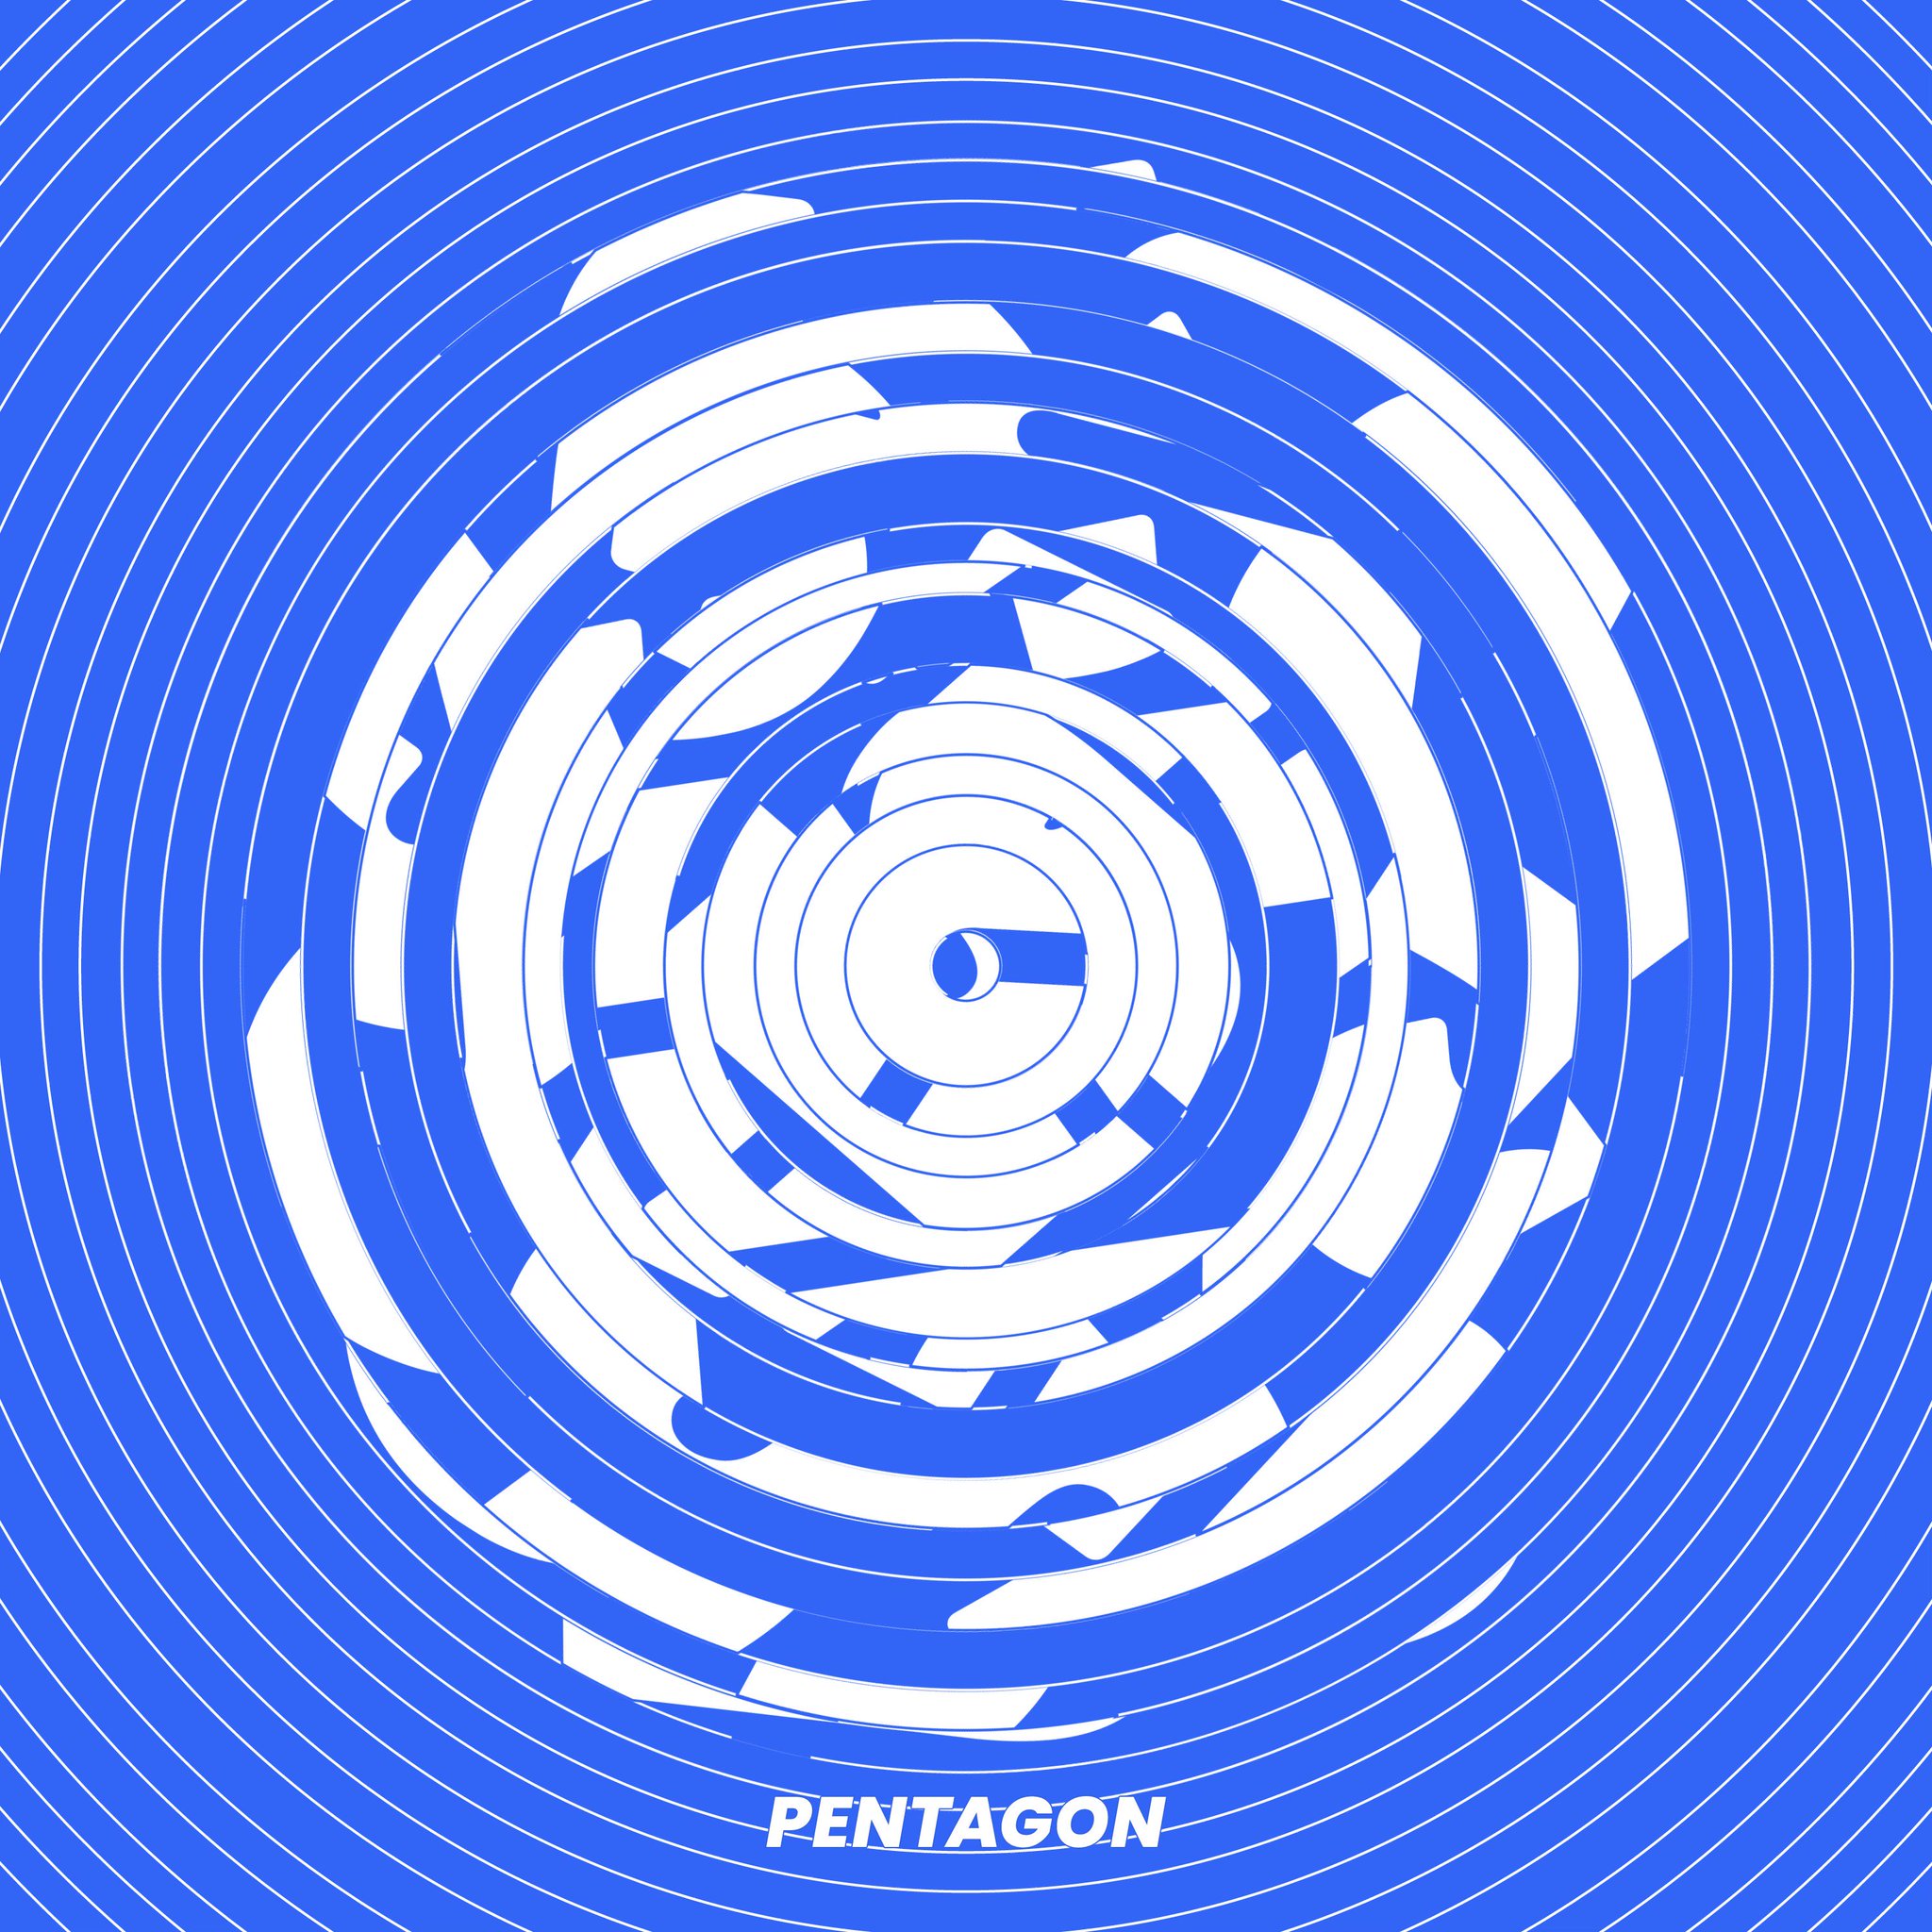 CUBE_PTG_JAPAN on Twitter: "2023.05.10 0AM COMING SOON #PENTAGON #펜타곤 #Shh  https://t.co/rMhmAkXoNo" / Twitter